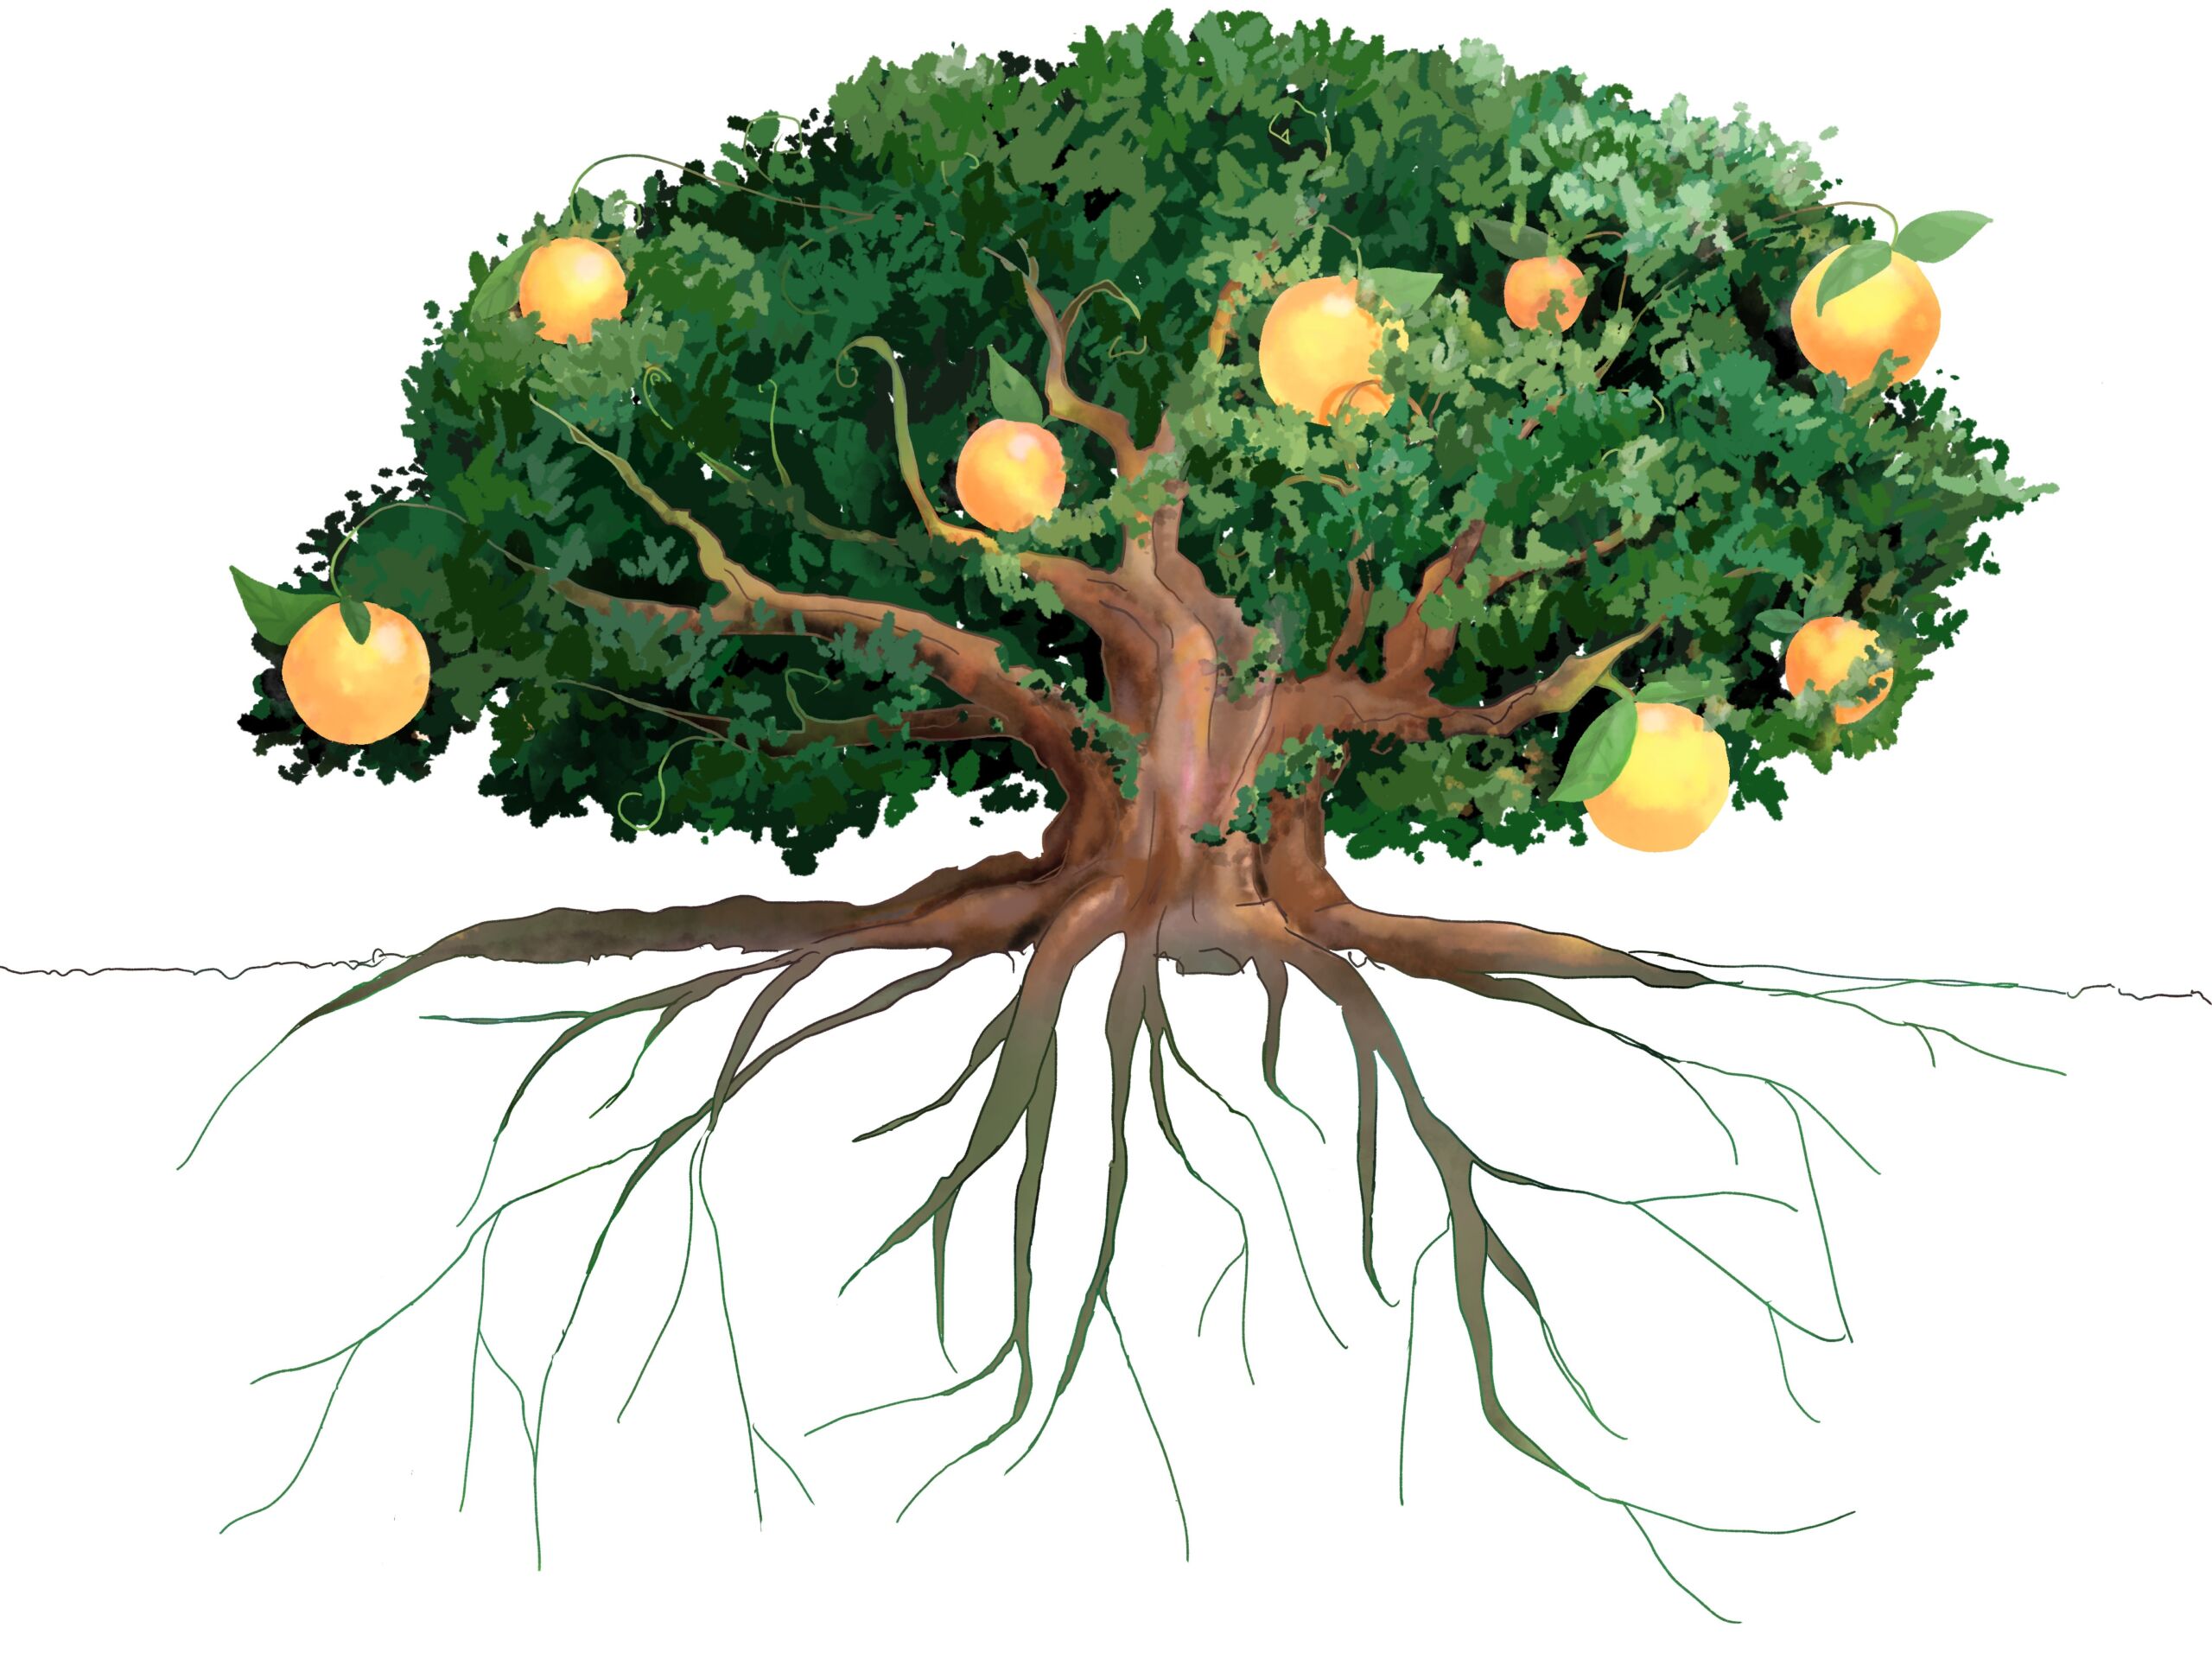 “Take root below and bear fruit above”